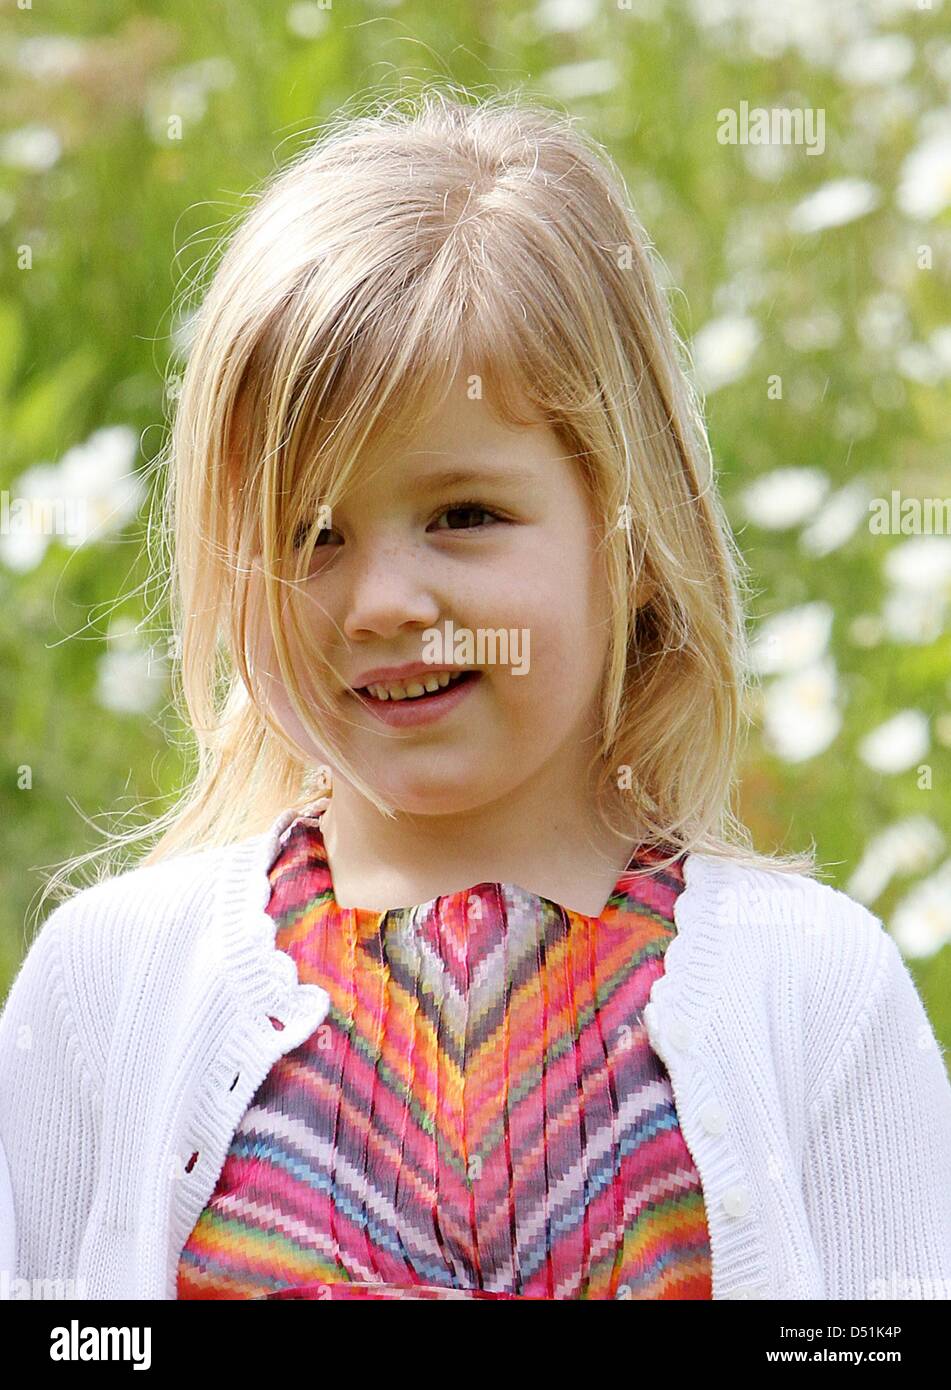 dutch-princess-alexia-the-middle-daughter-of-prince-willem-alexander-D51K4P.jpg